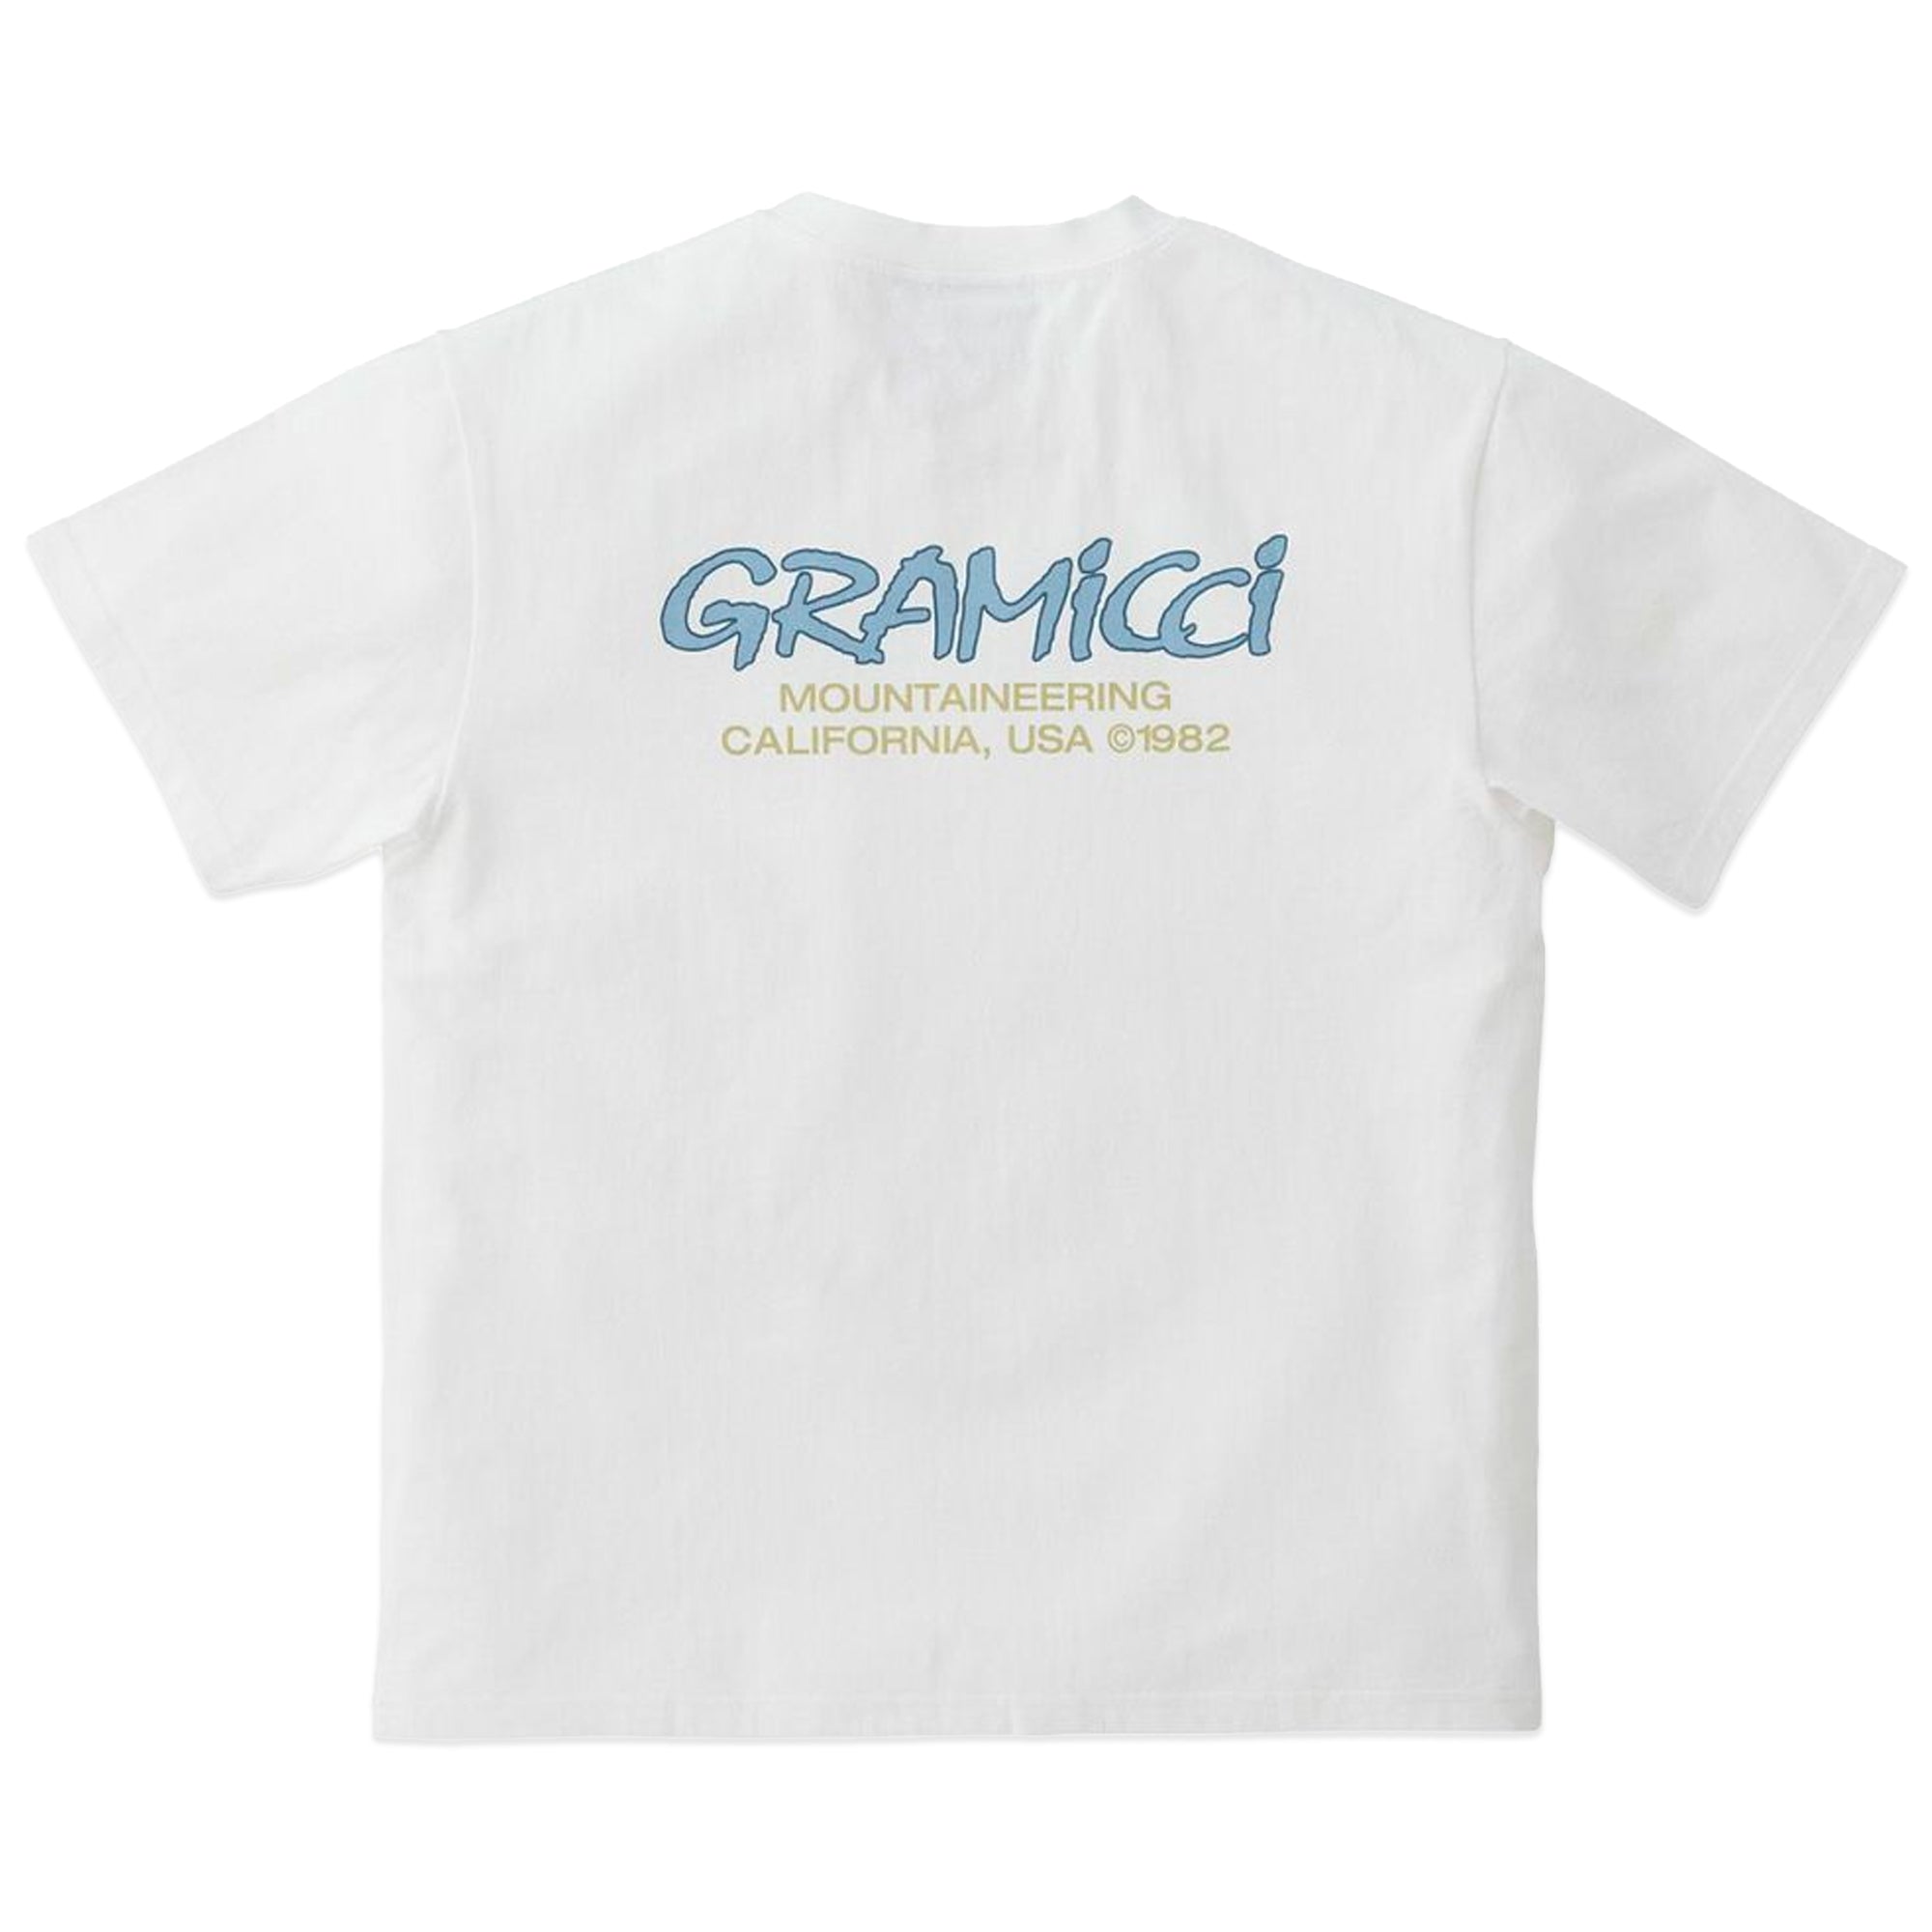 Gramicci Mountaineering T-Shirt - White